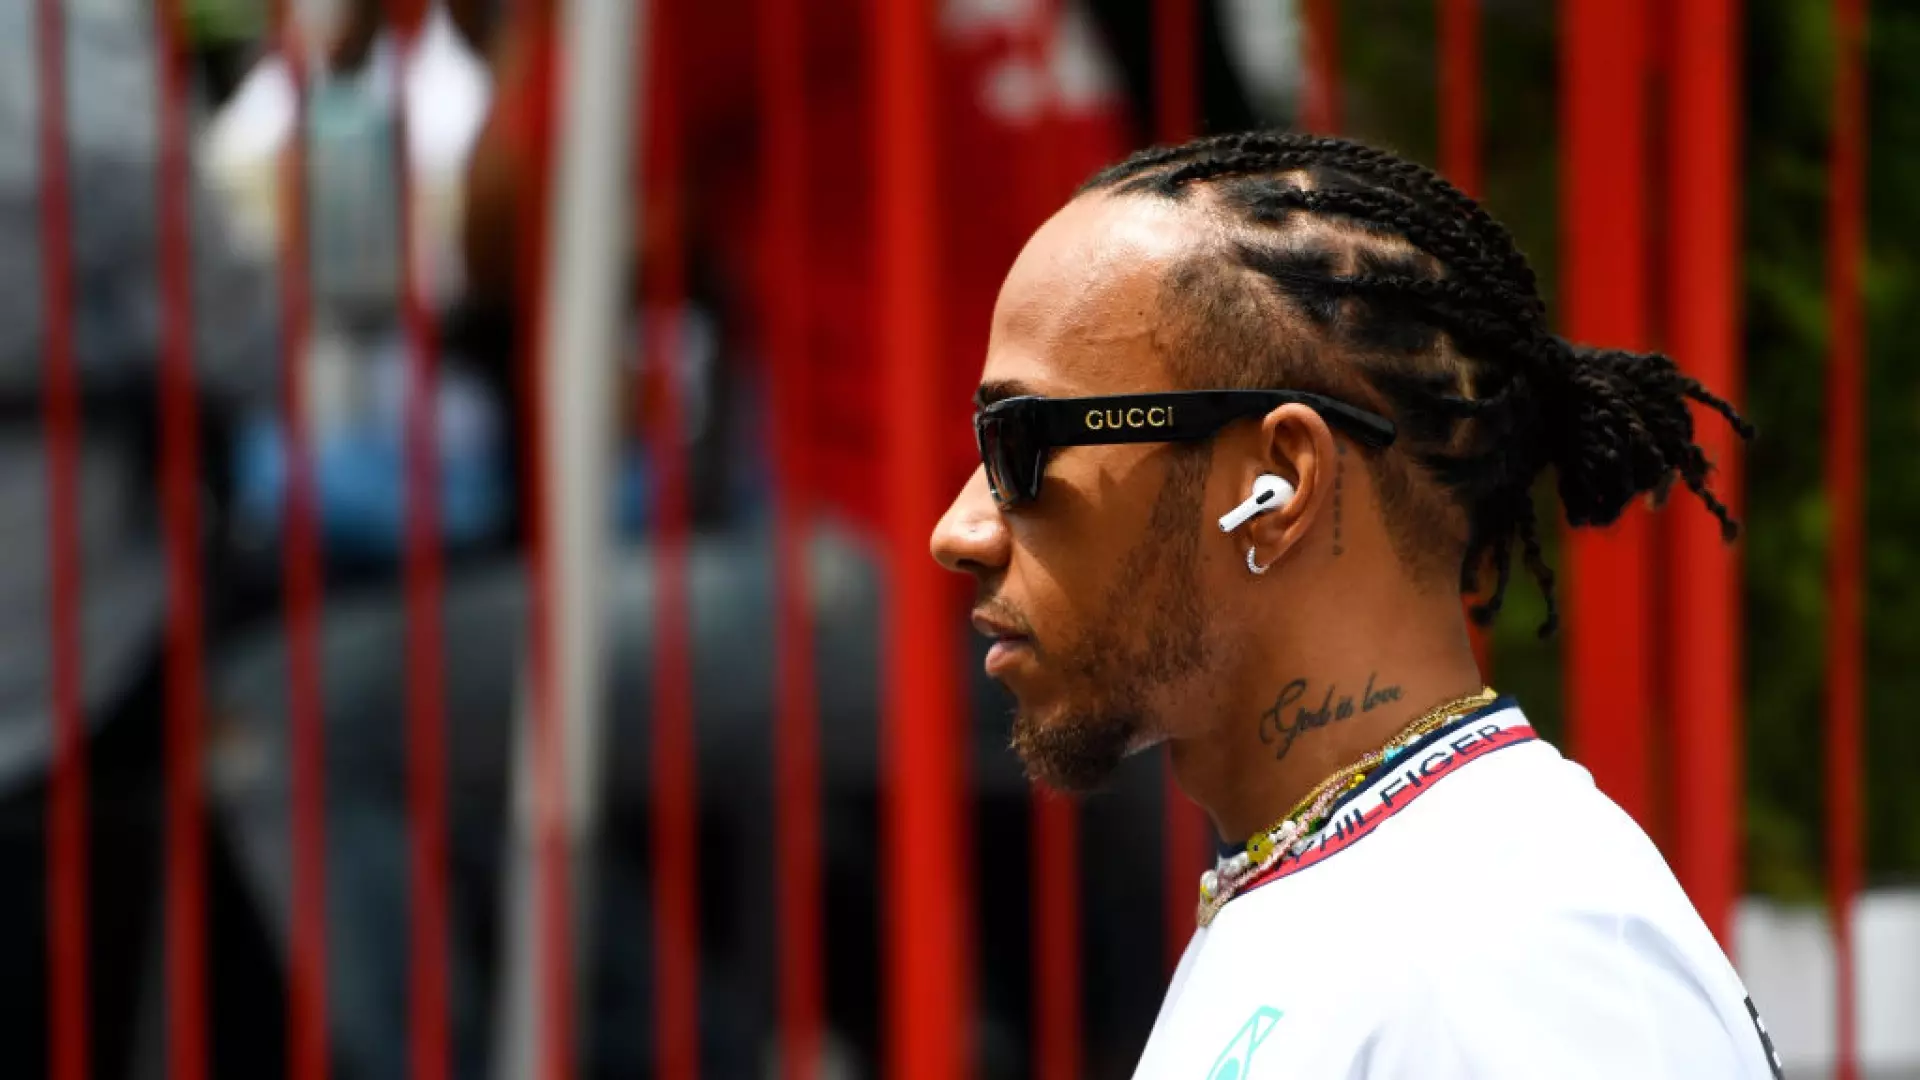 F1, Lewis Hamilton è lapidario: “Macchina difficile da guidare”